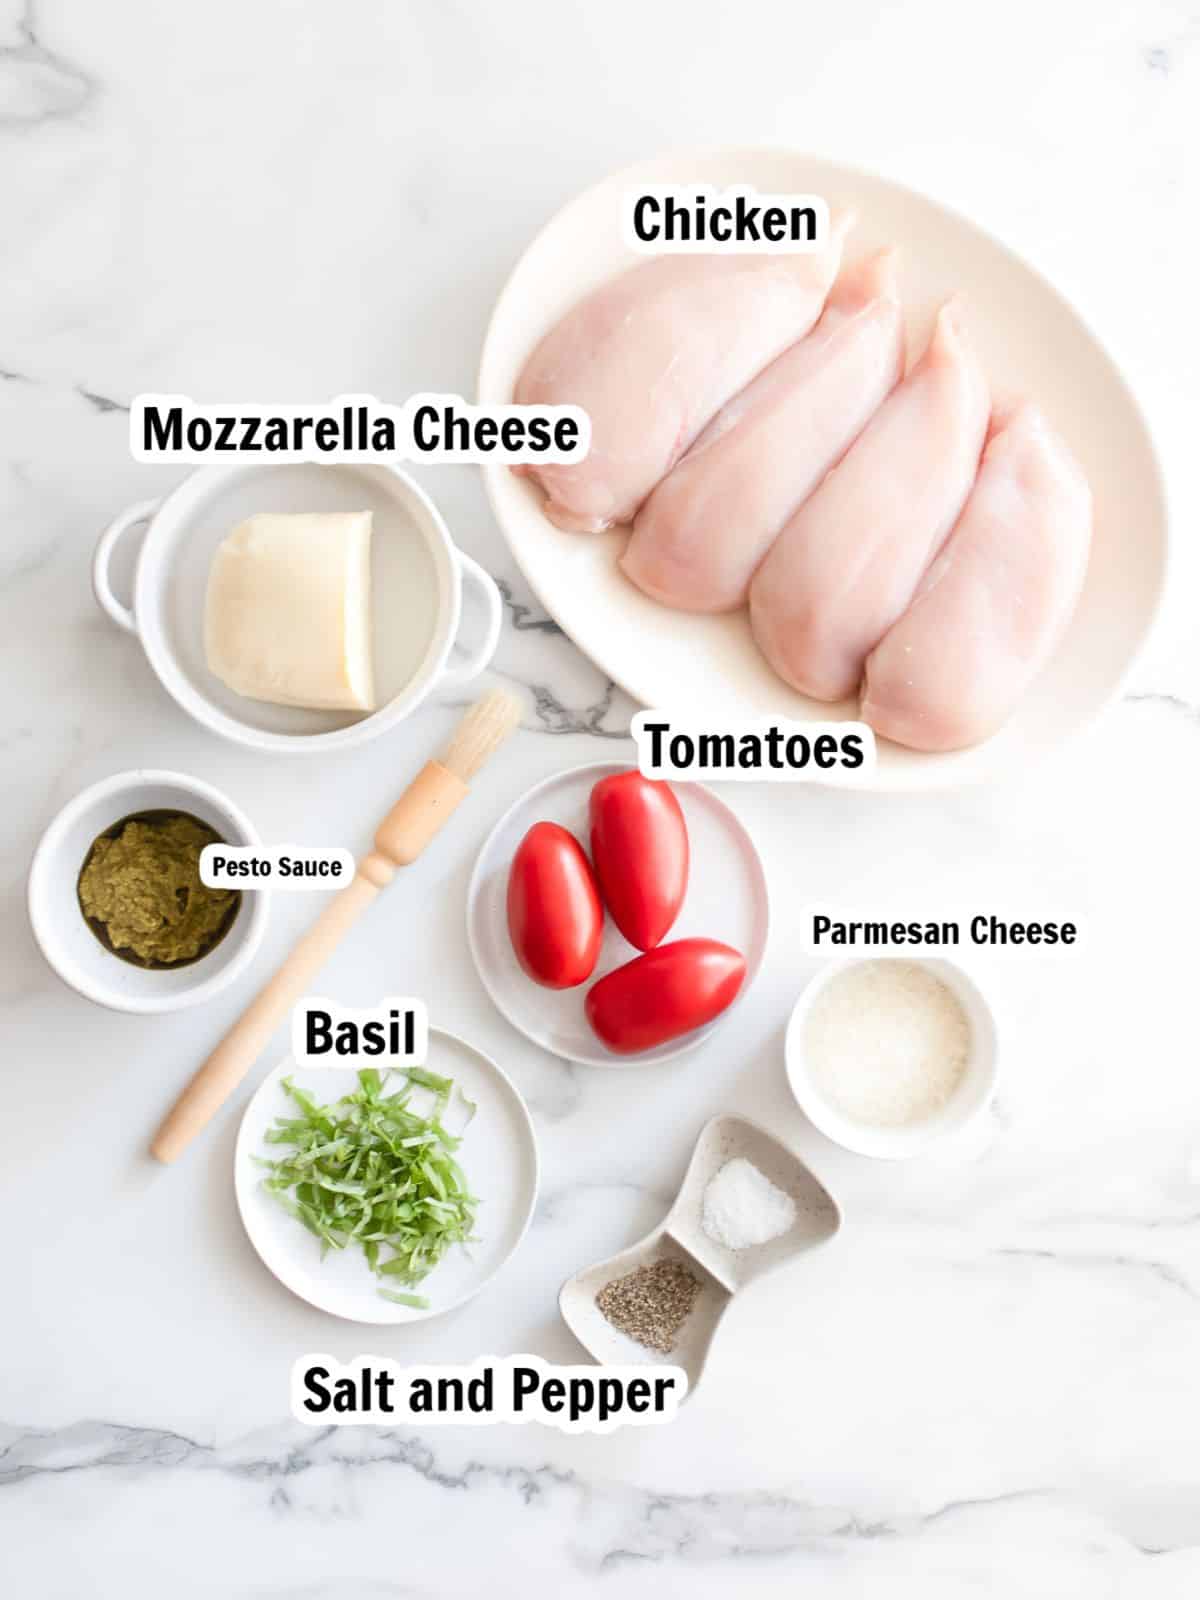 Ingredients chicken, basil, tomatoes, mozzarella, Parmesan cheese and basil pesto sauce.